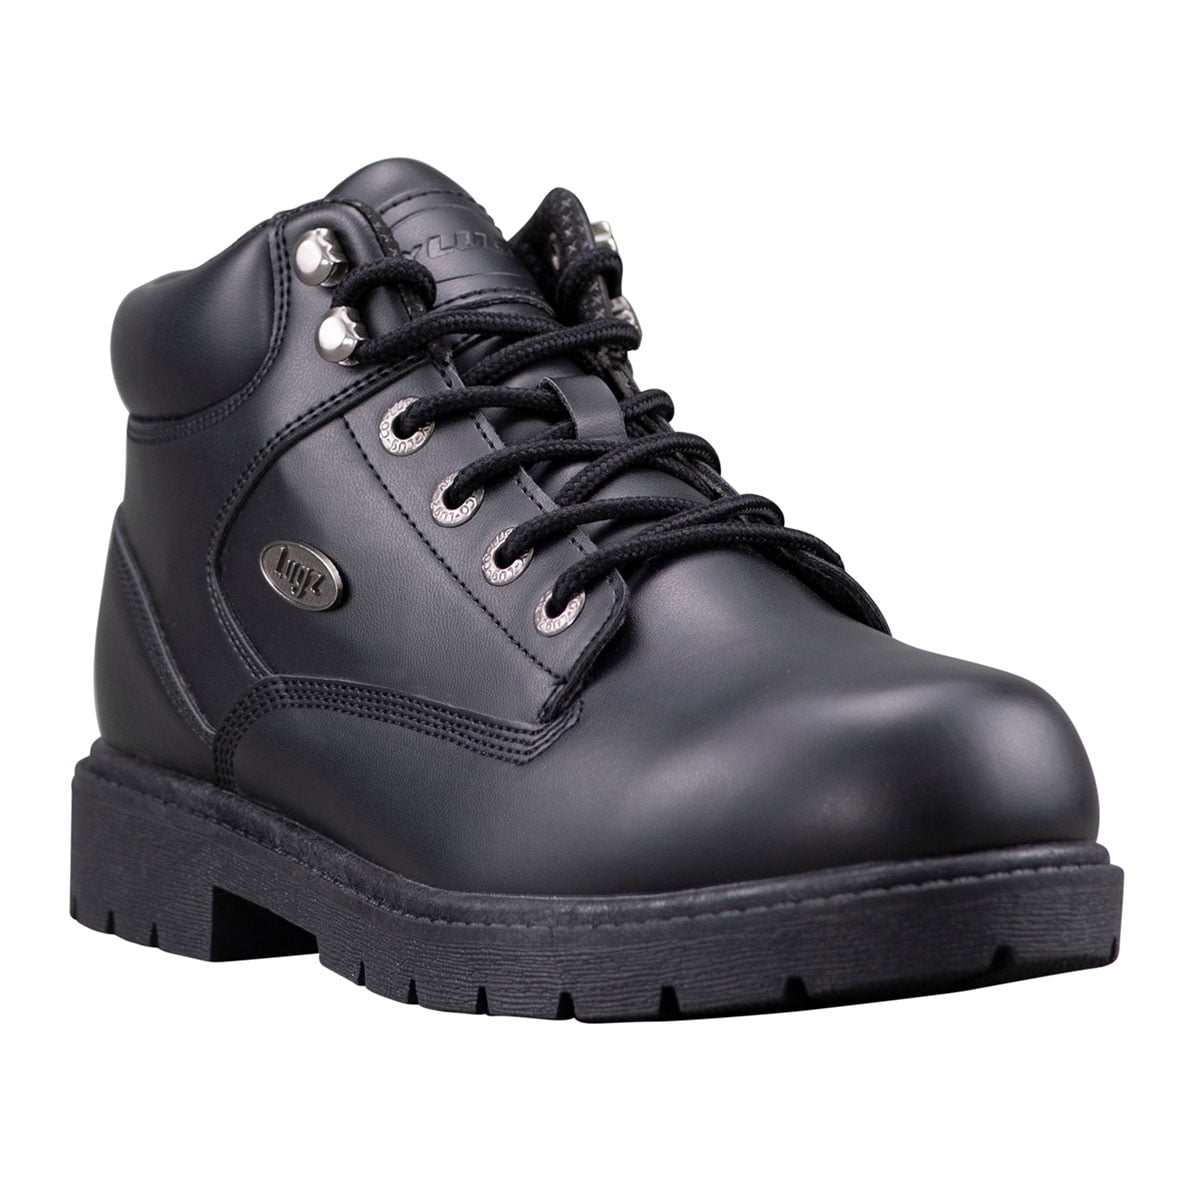 NEW Lugz Men's Savoy Kitchen Non-slip Slip Resistant shoes,Black MSVYL-001 